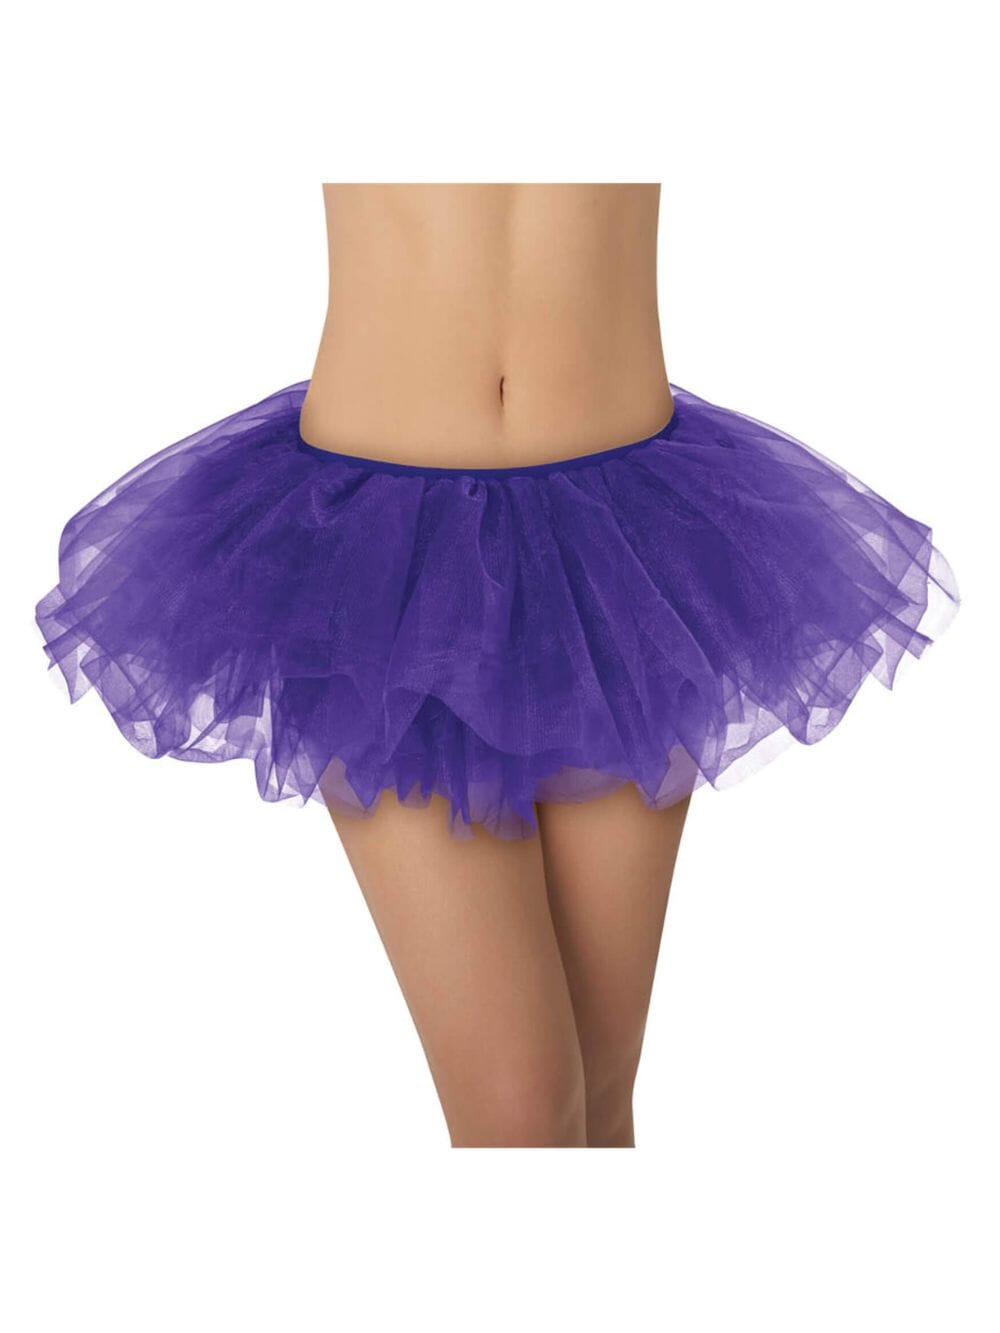 Purple - 5 Layer Tutu Skirt for Running, Dress-Up, Costumes - Sydney So Sweet